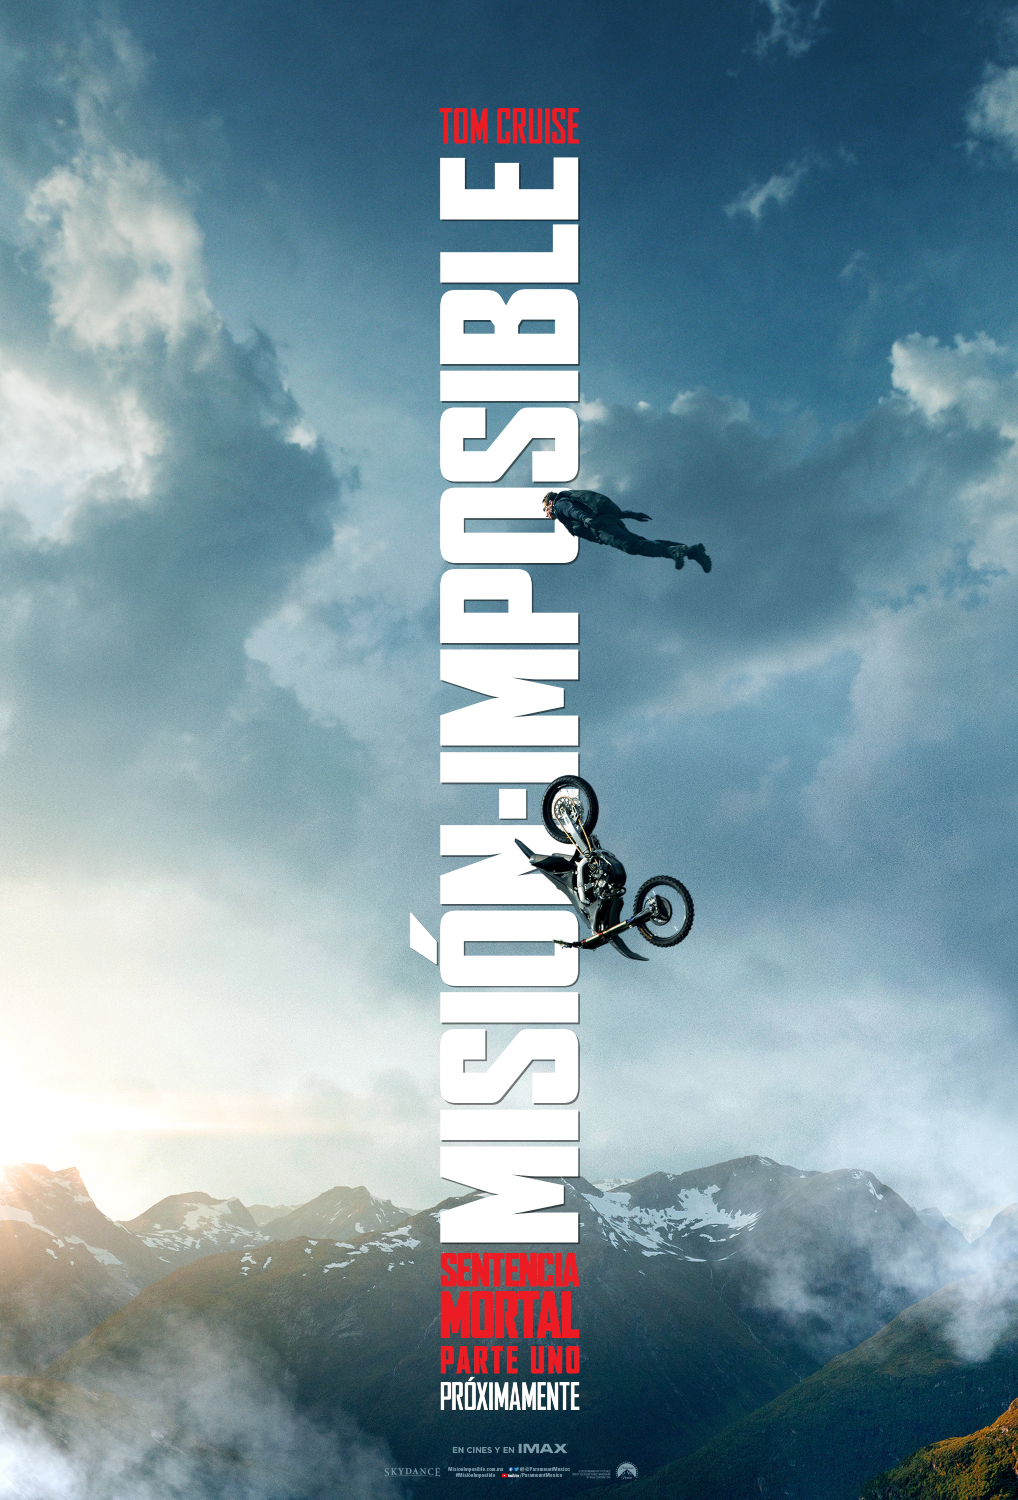 tom-cruise-parapente-moto-en-el-aire-acrobacia-mision-imposible-7-poster-imax